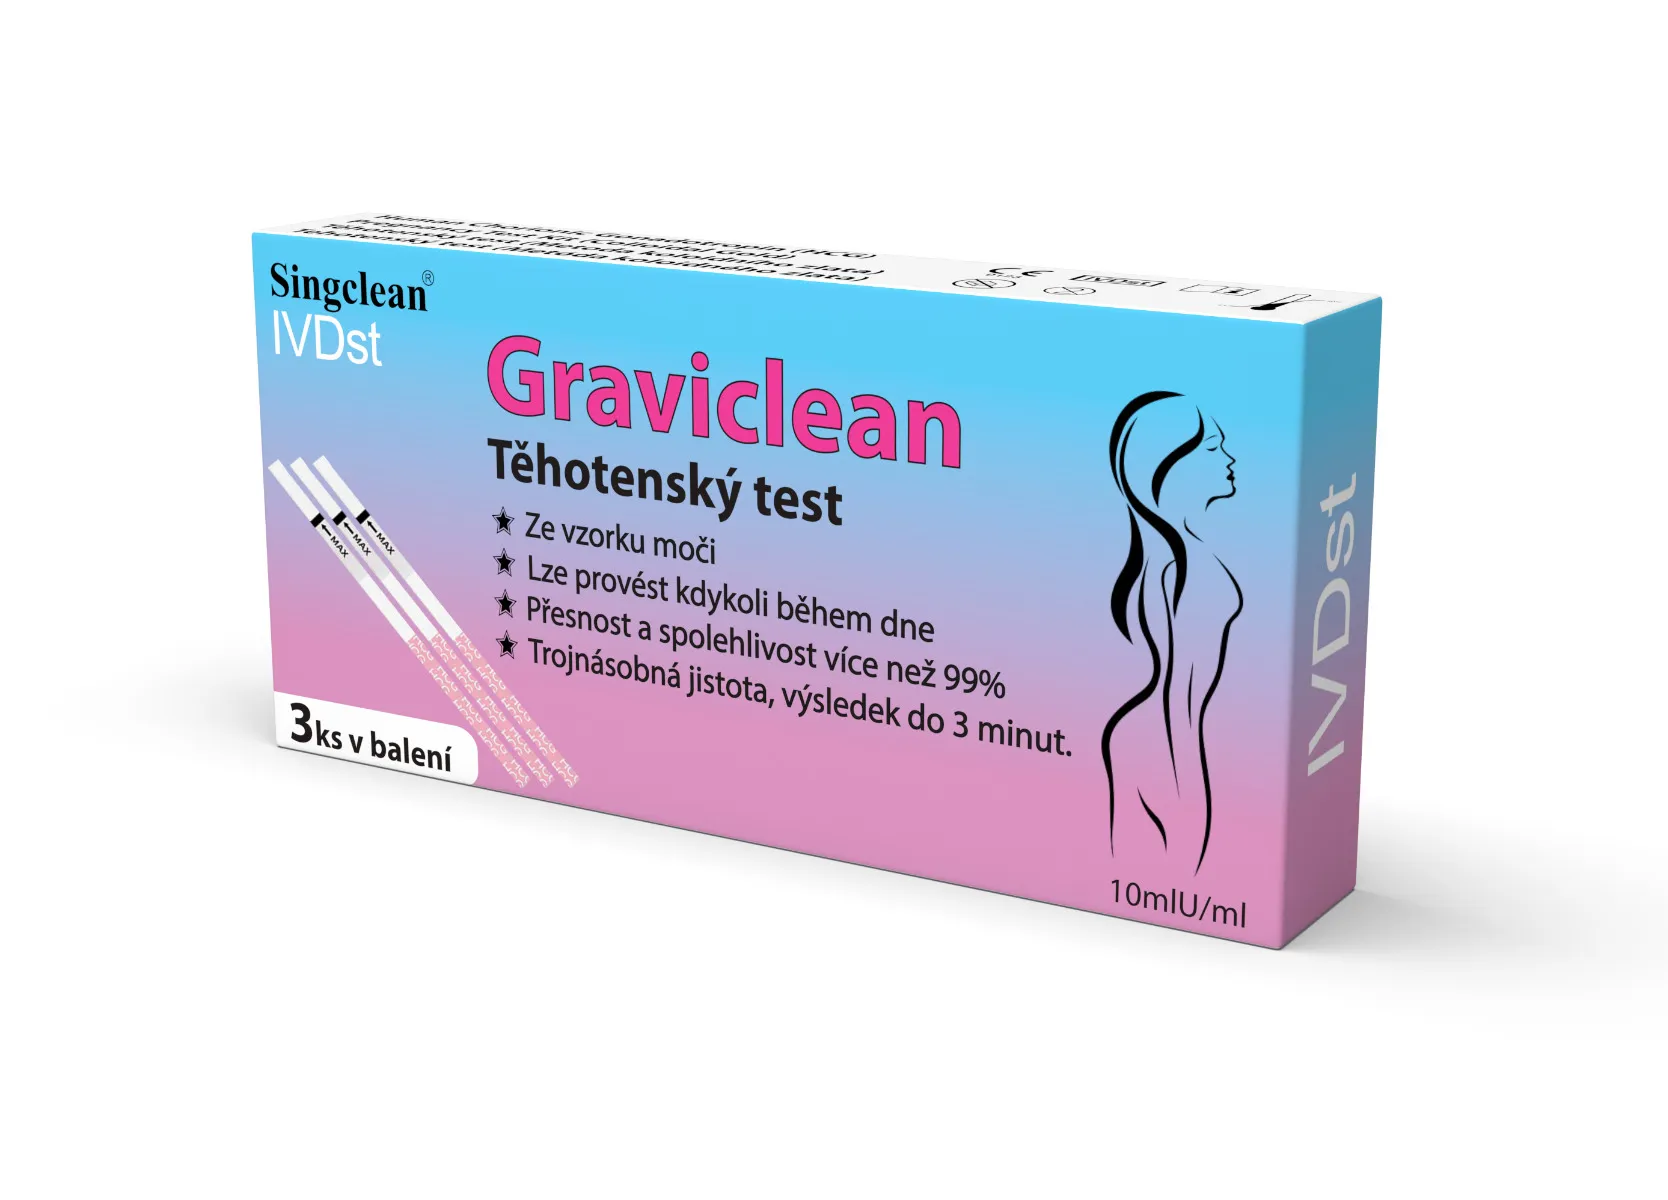 Singclean Graviclean HCG 10mlU/ml těhotenský test 3 ks